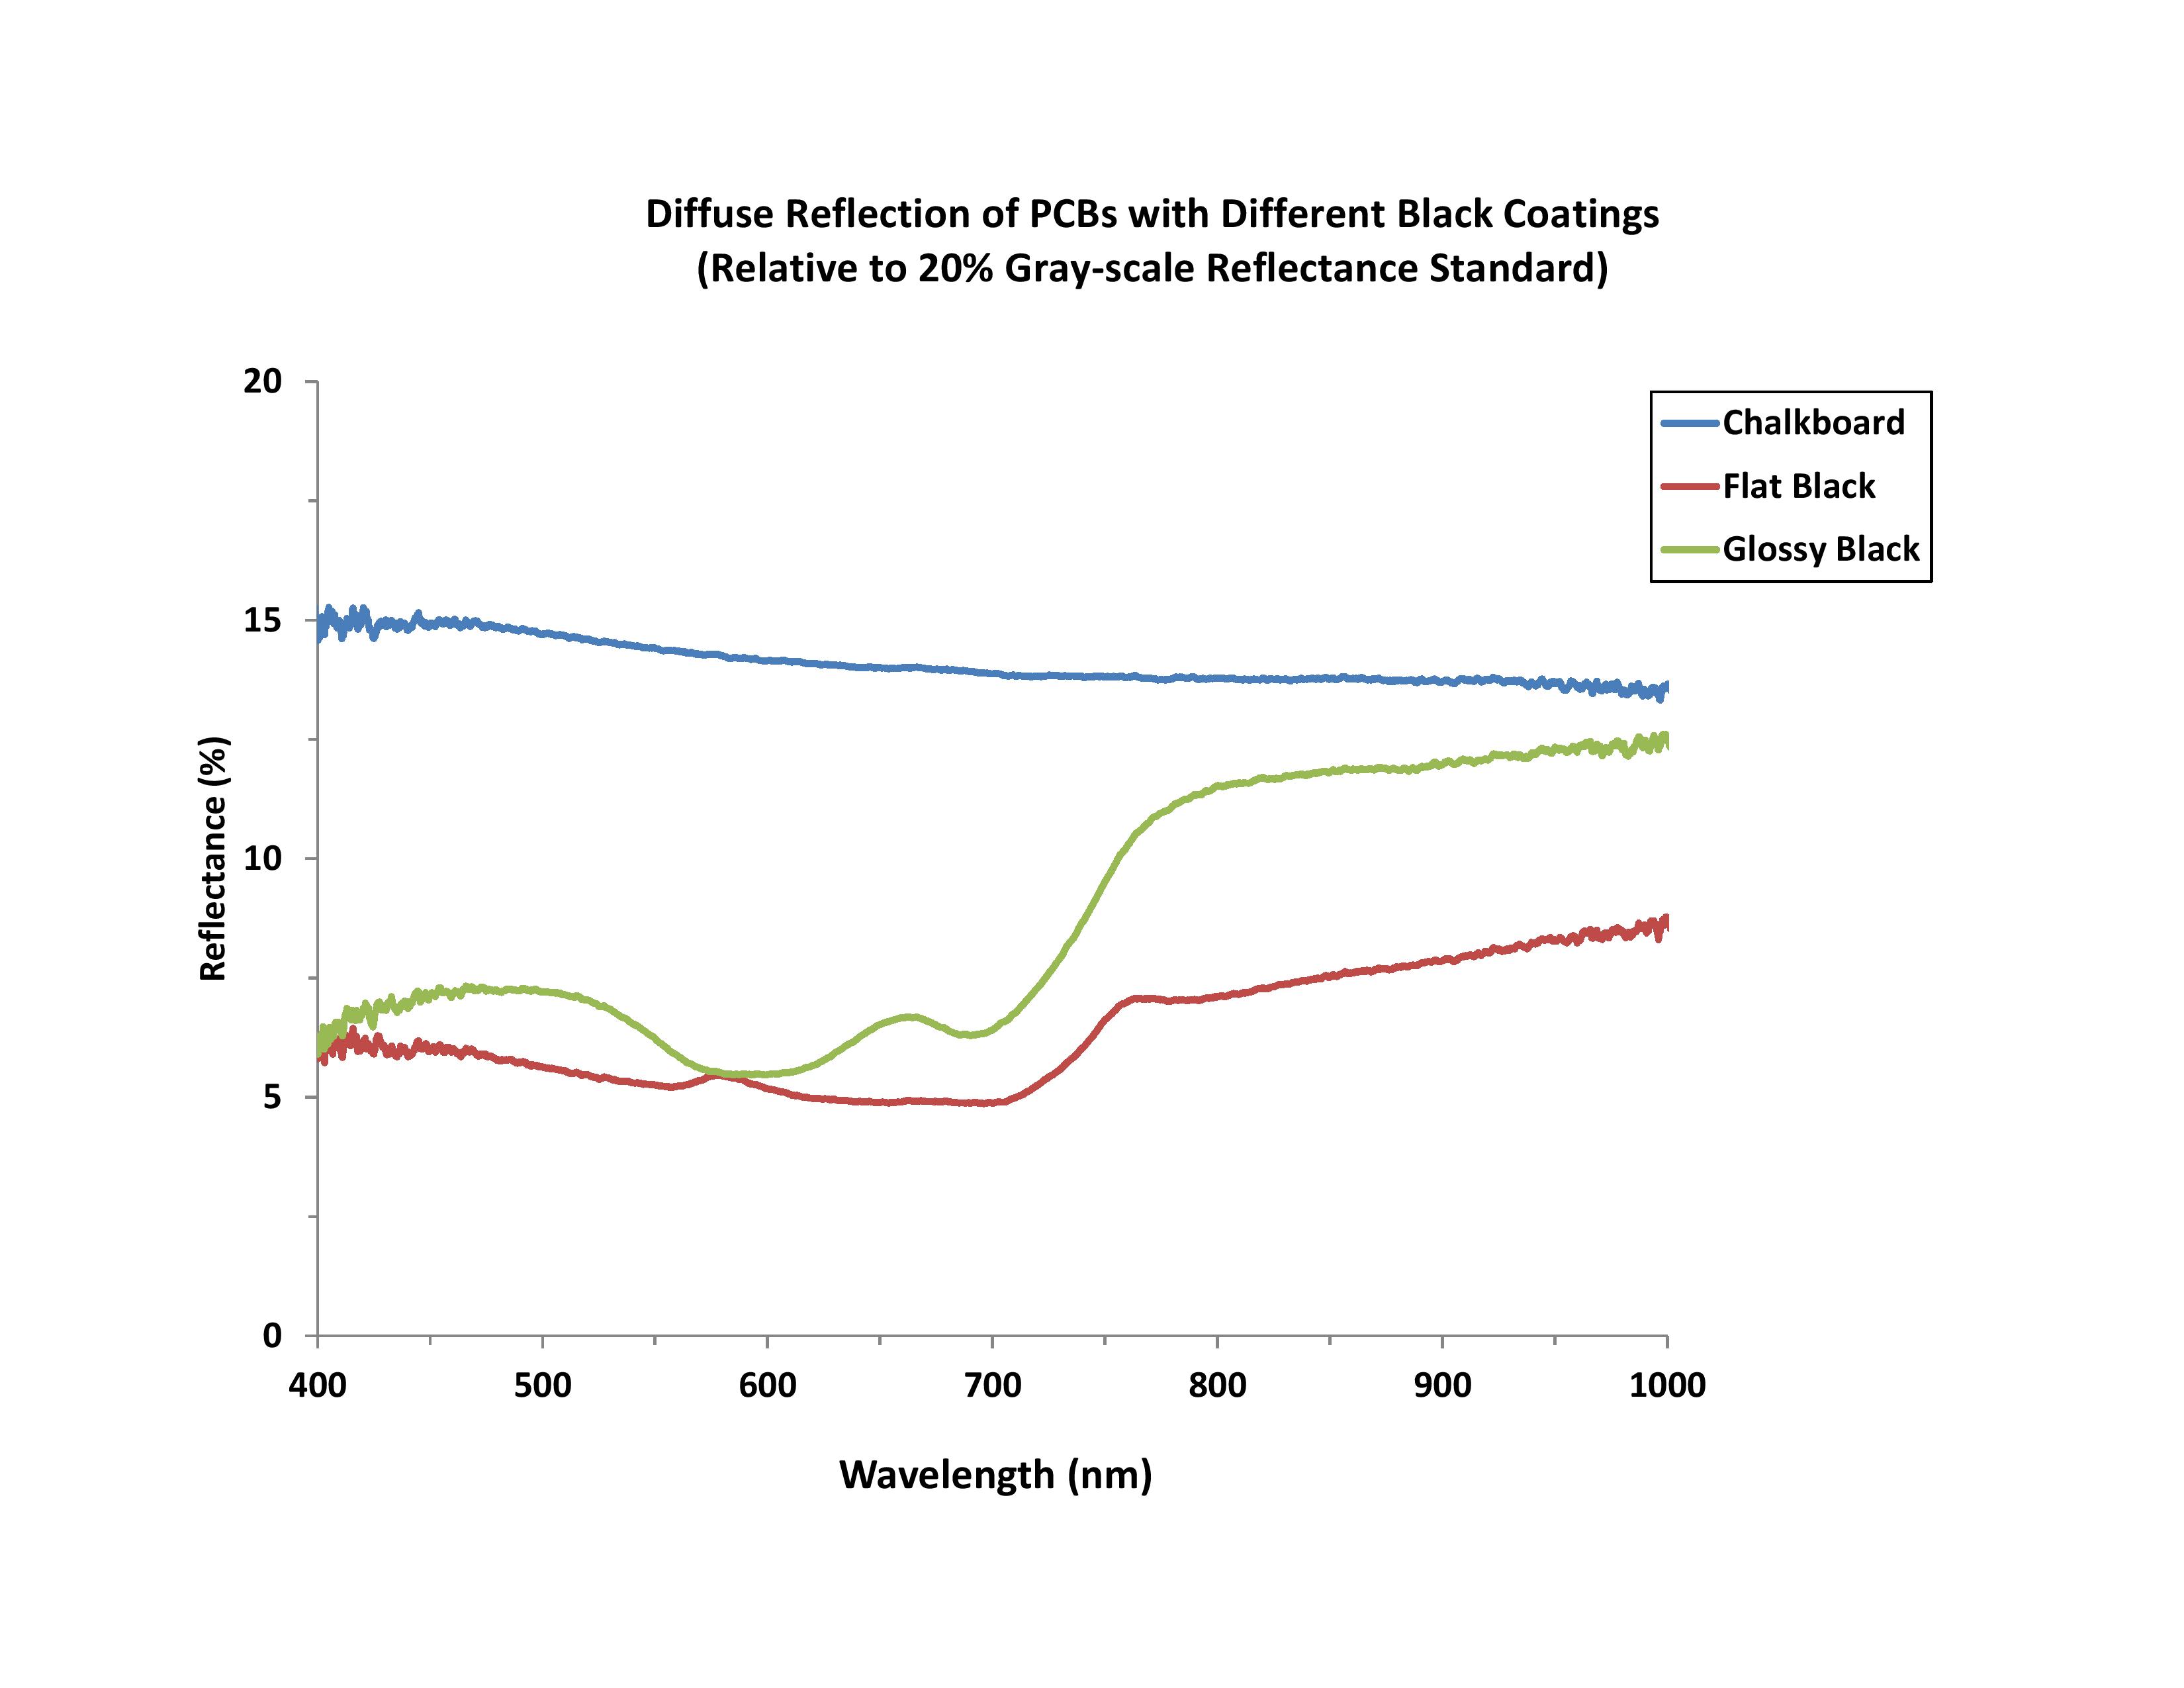 ReflectancePCBBlog_Figure 3 - Diffuse Reflectance of PCBs.jpg